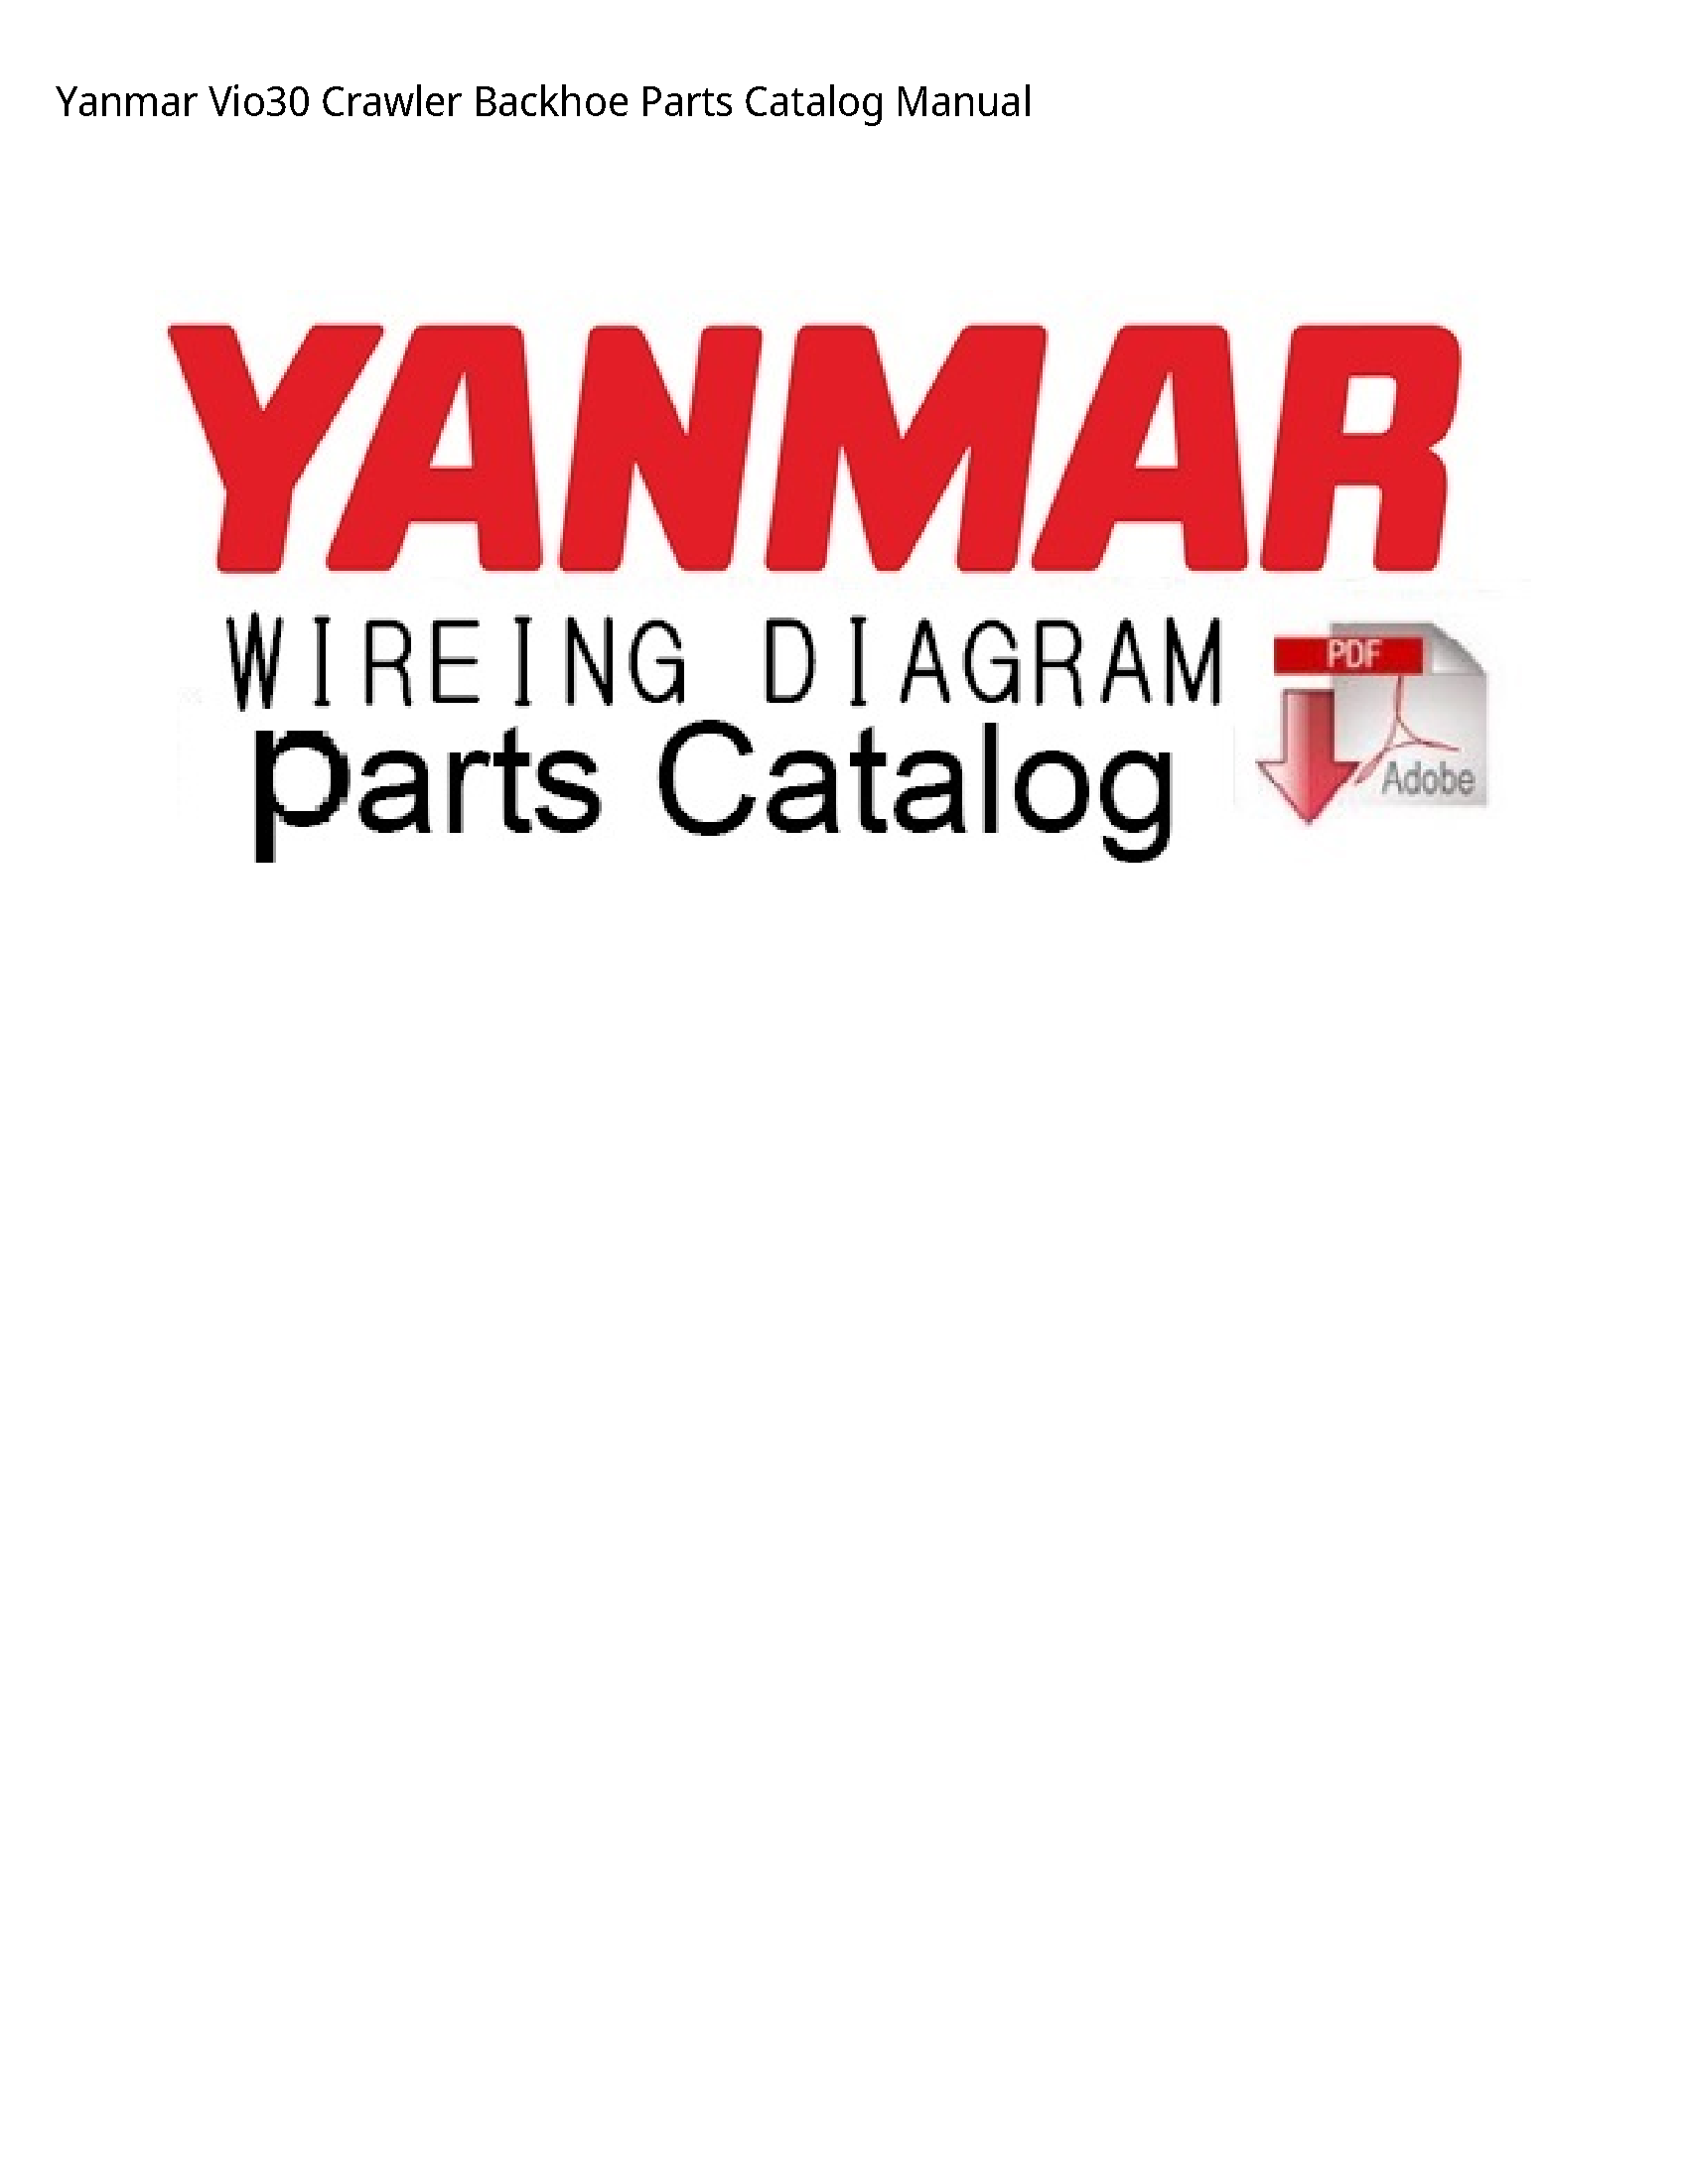 Yanmar Vio30 Crawler Backhoe Parts Catalog manual